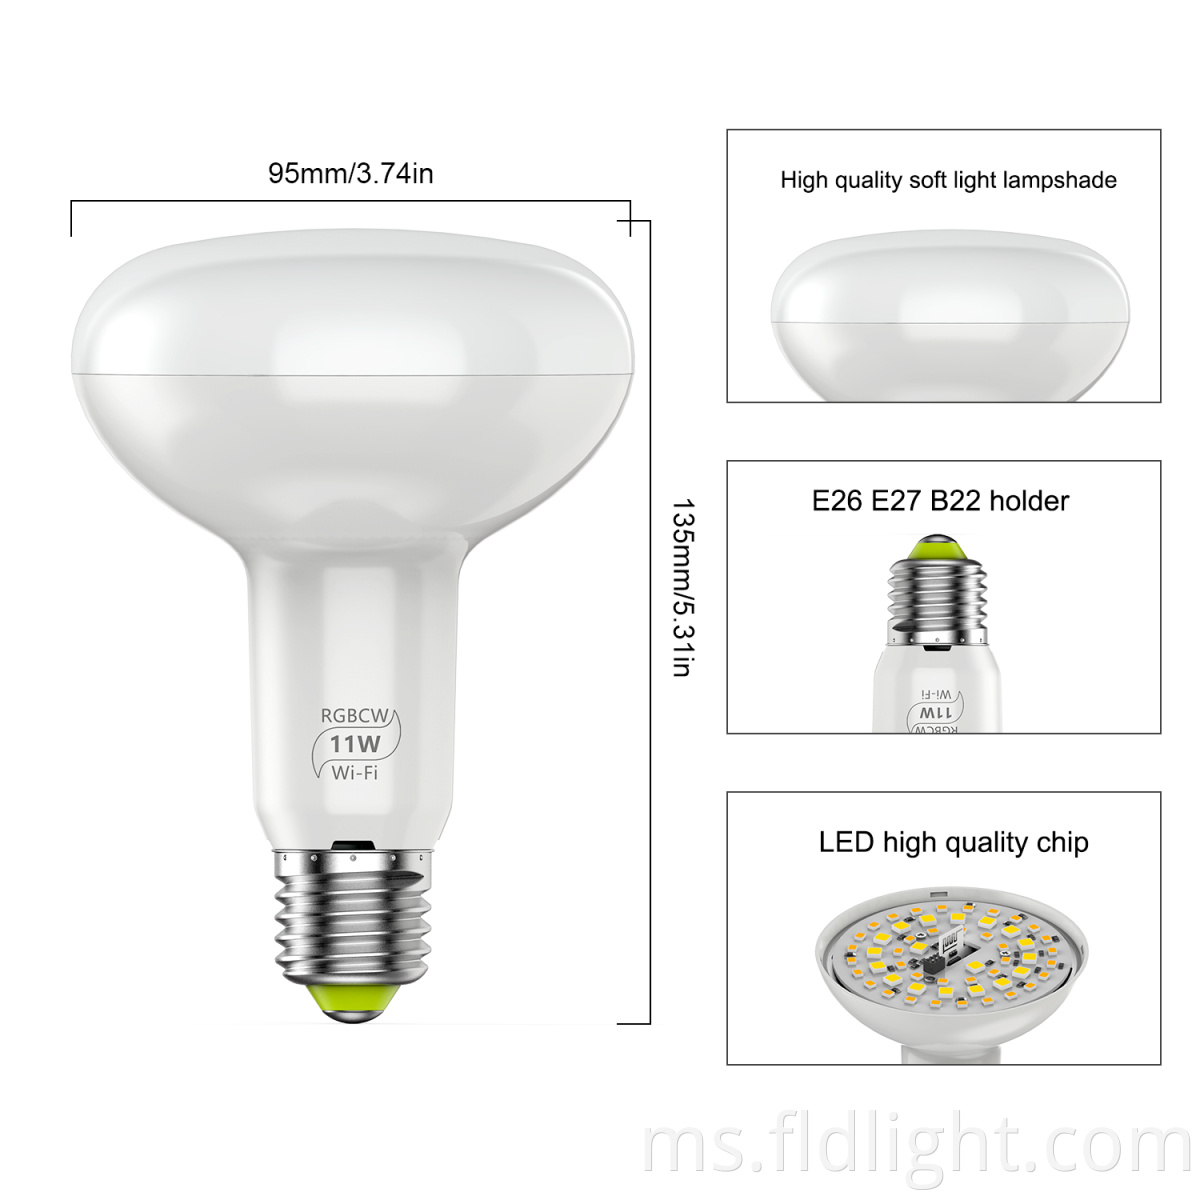 11W smart bulb Dimension